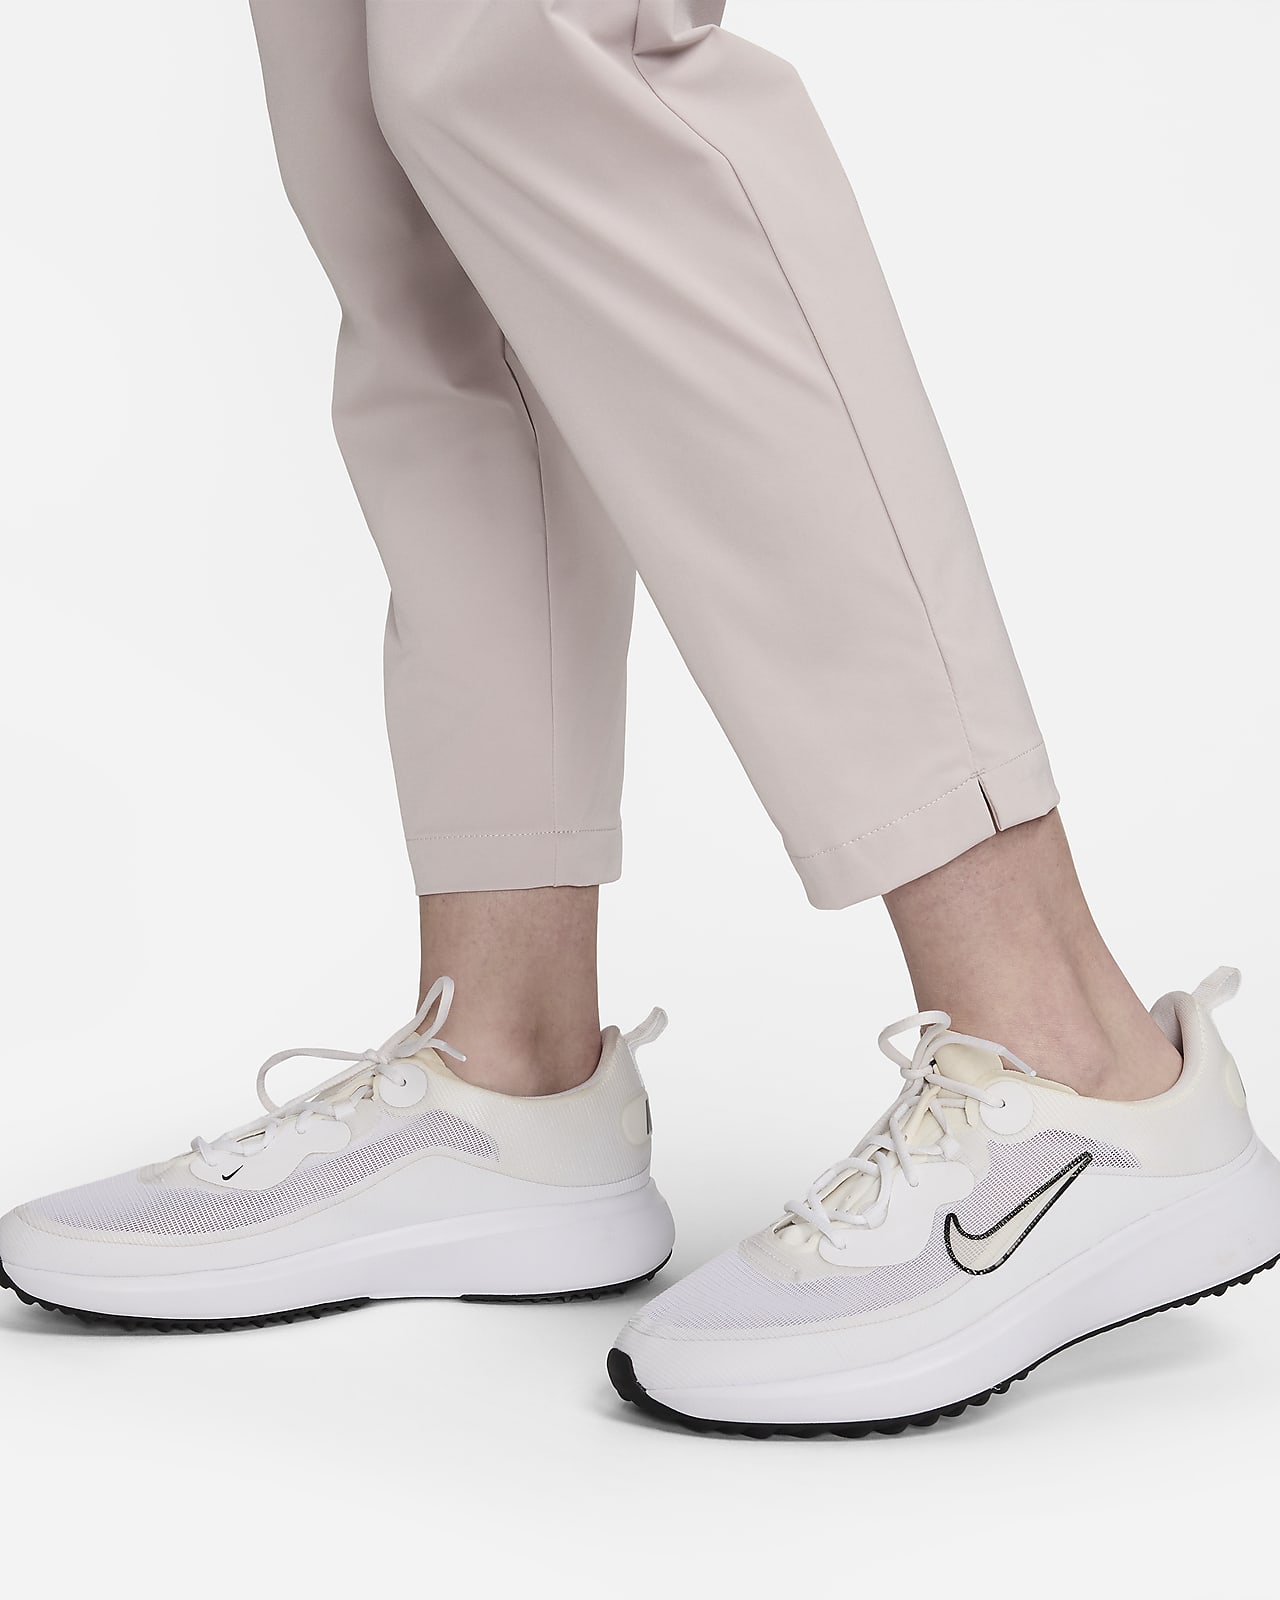 Nike All Womens Golf Pants (D-92334073069)